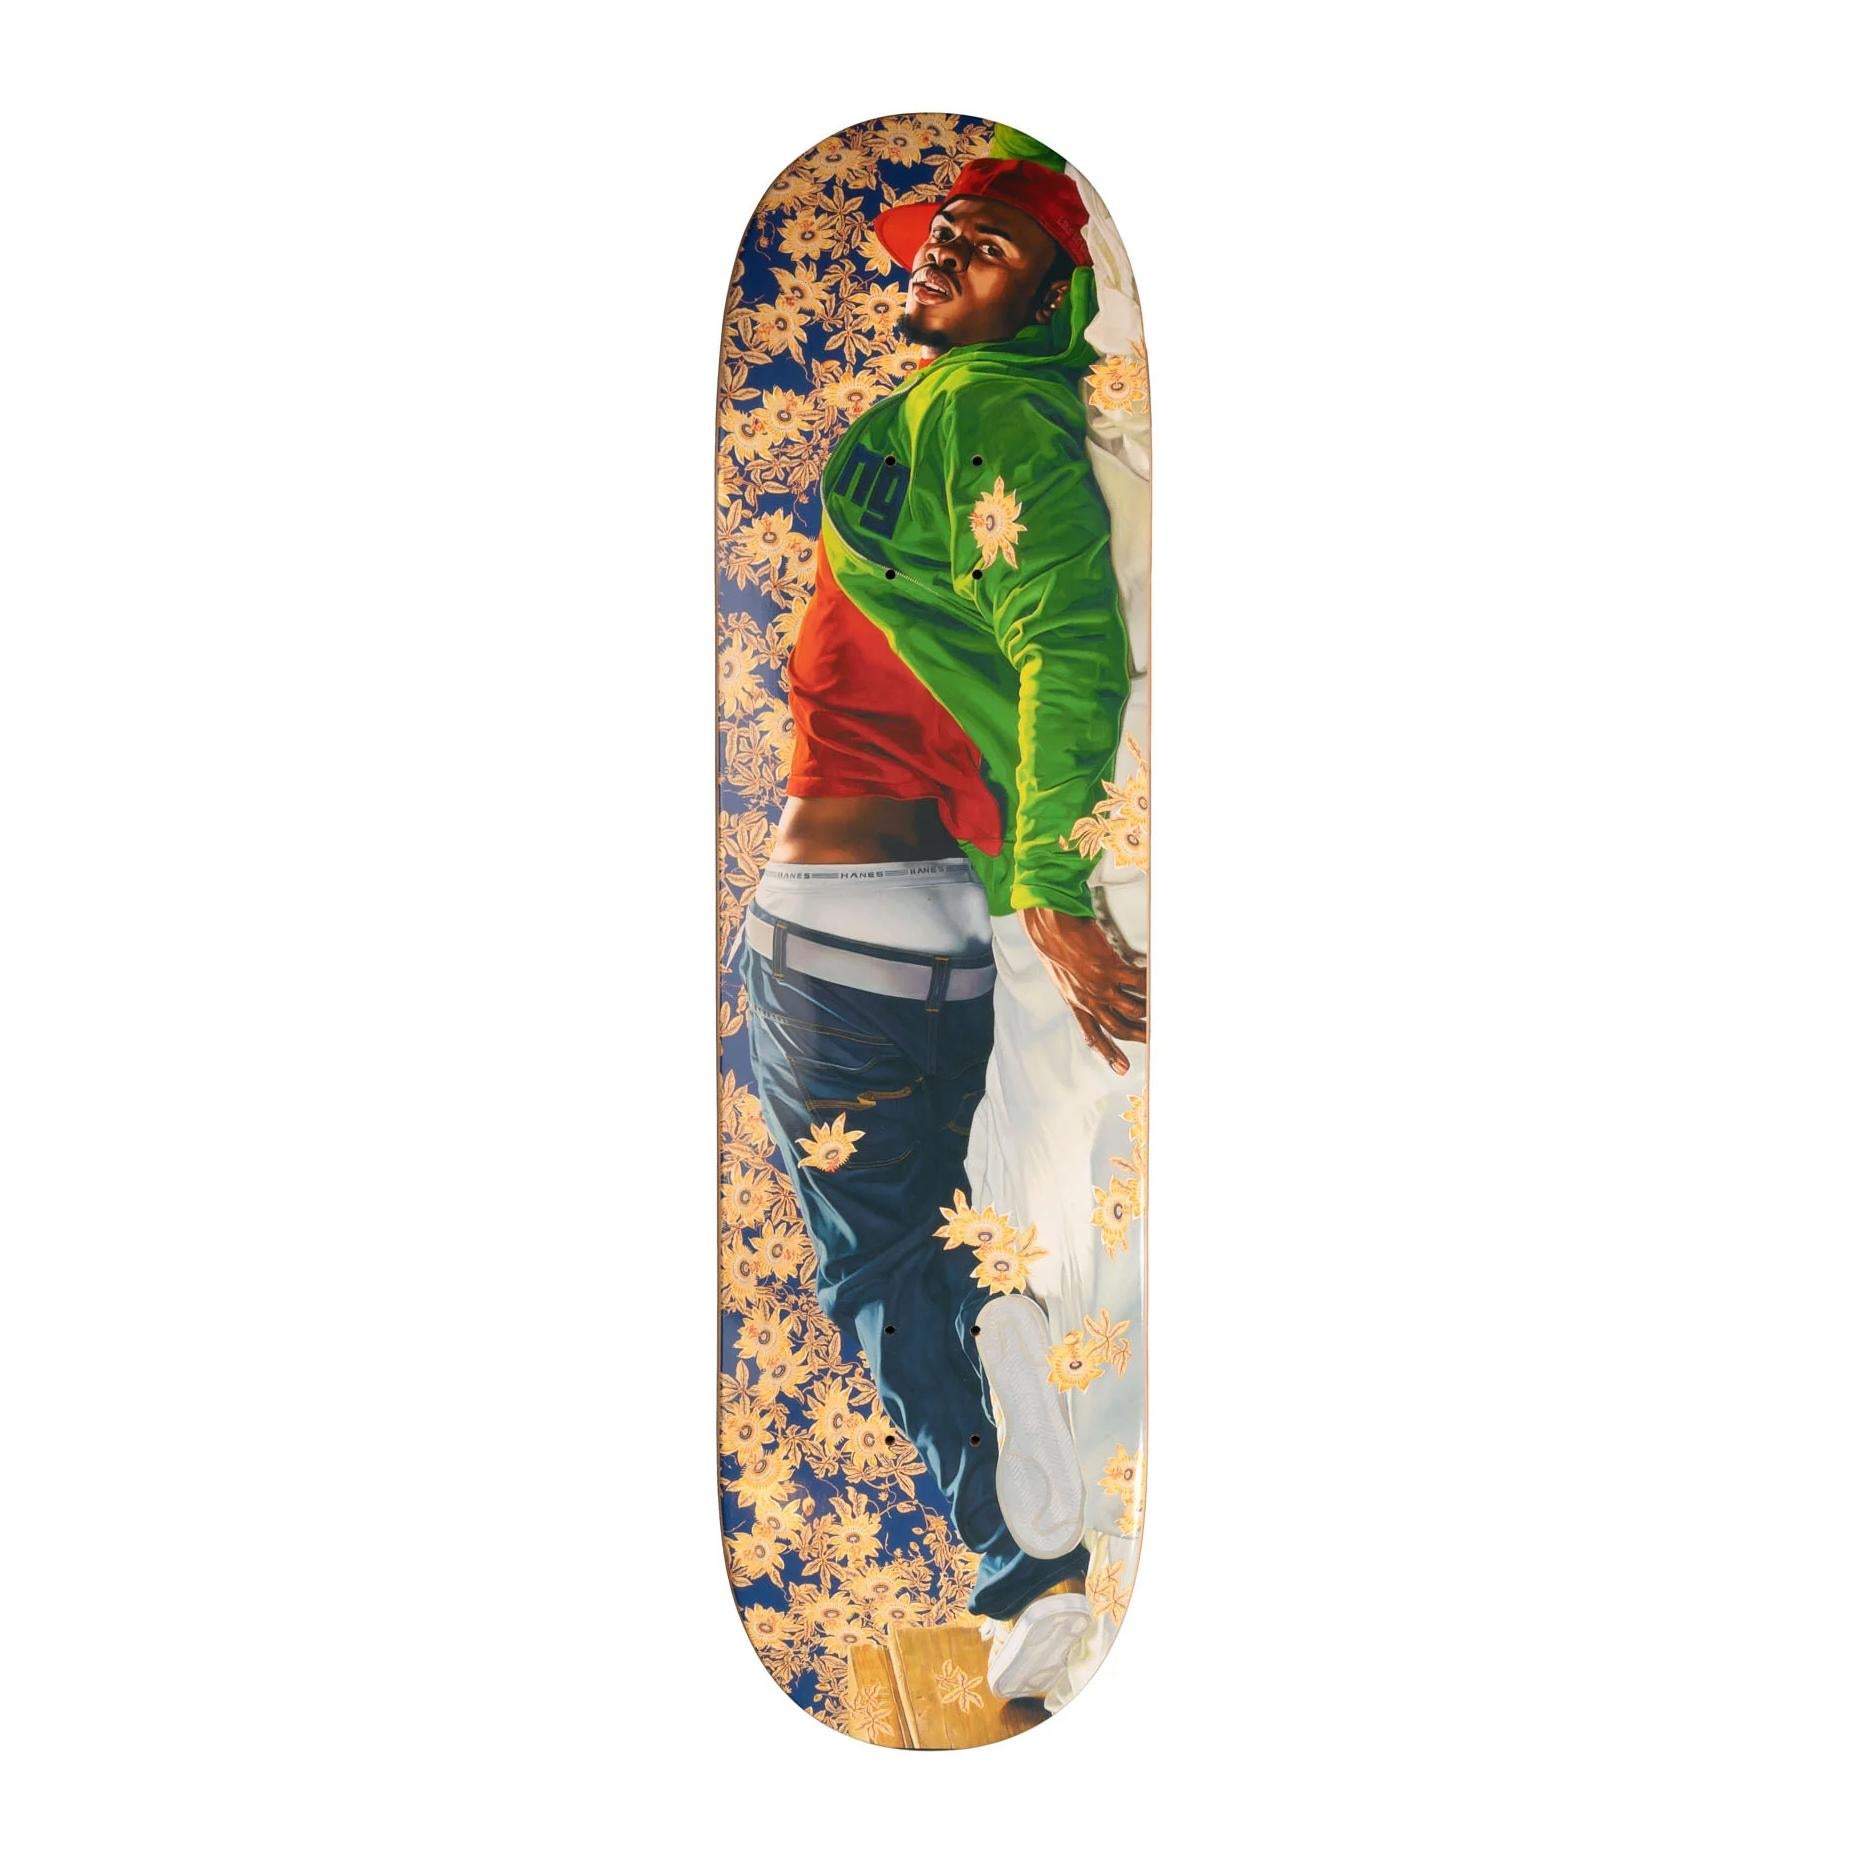 Femme Piquée Skateboard Deck par Kehinde Wiley en vente